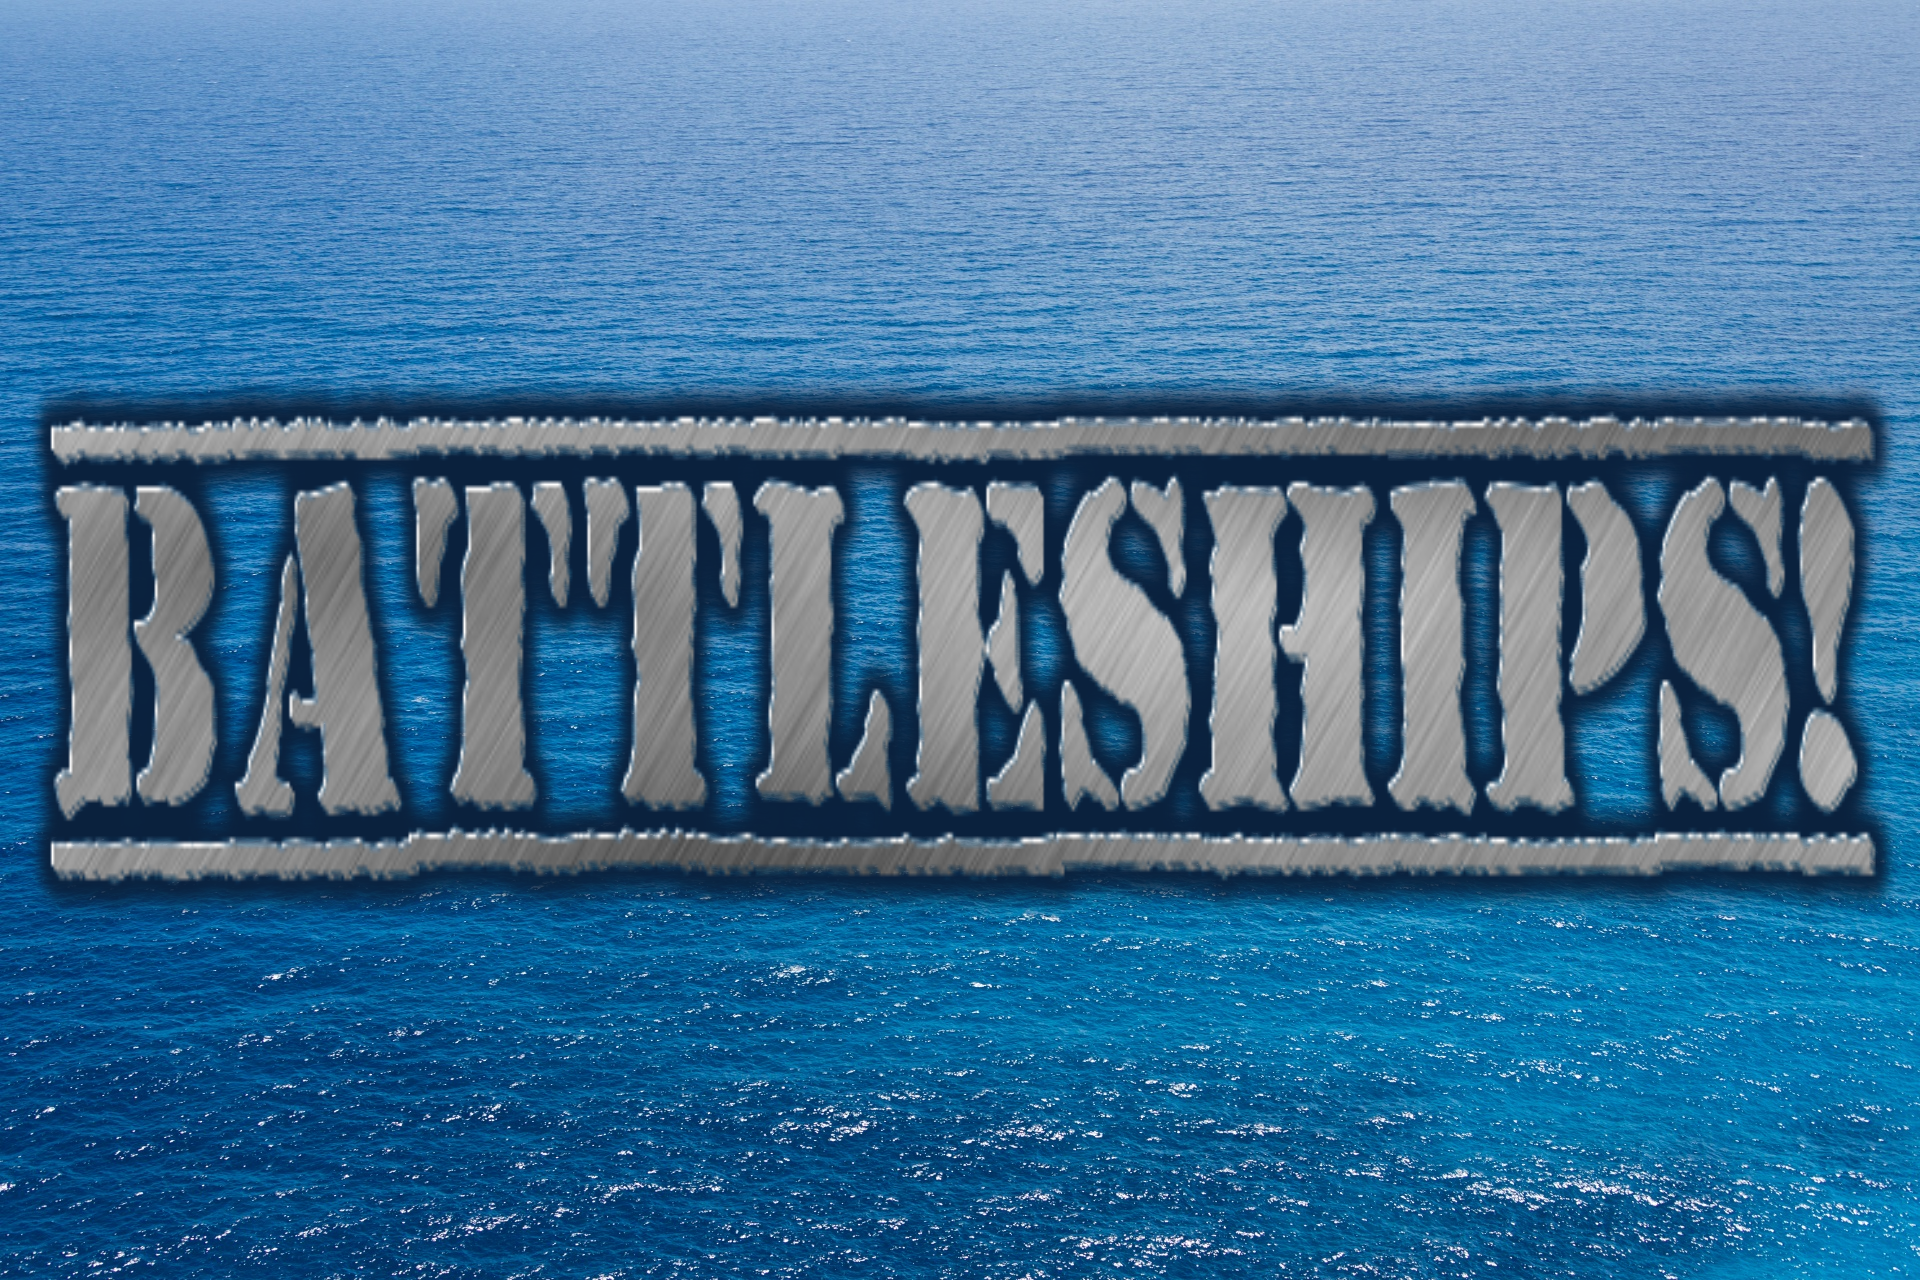 Battleships Title Page